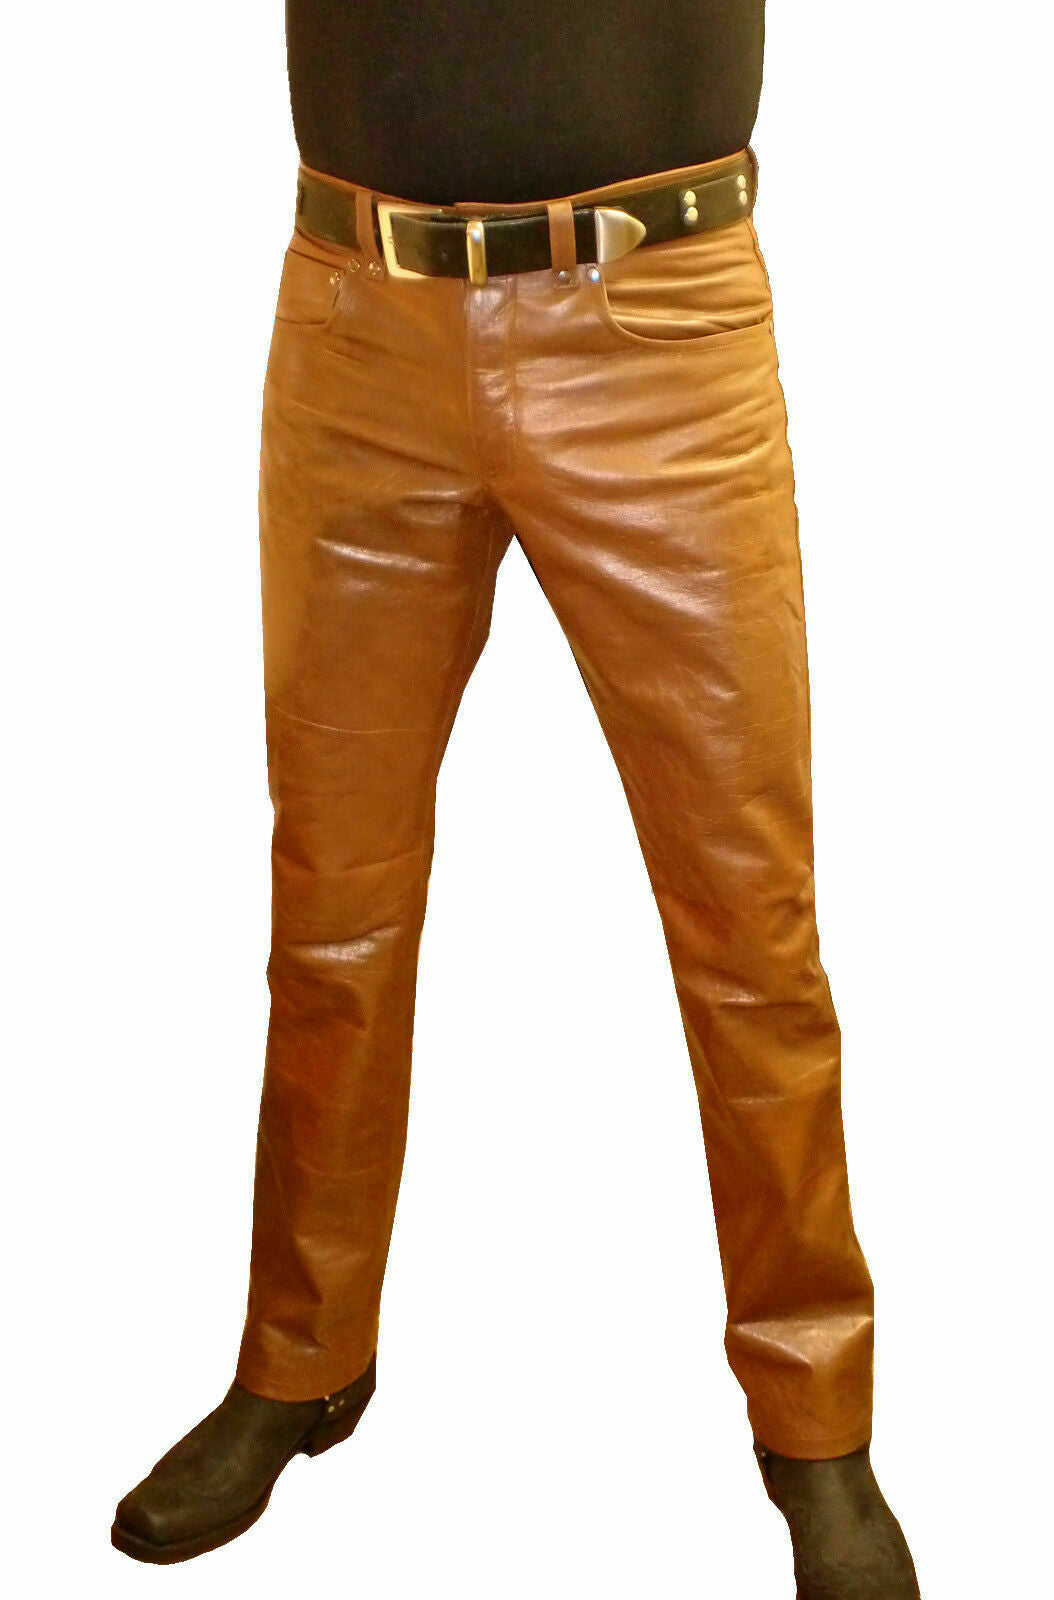 Men's Tan Genuine Leather Biker trouser pants